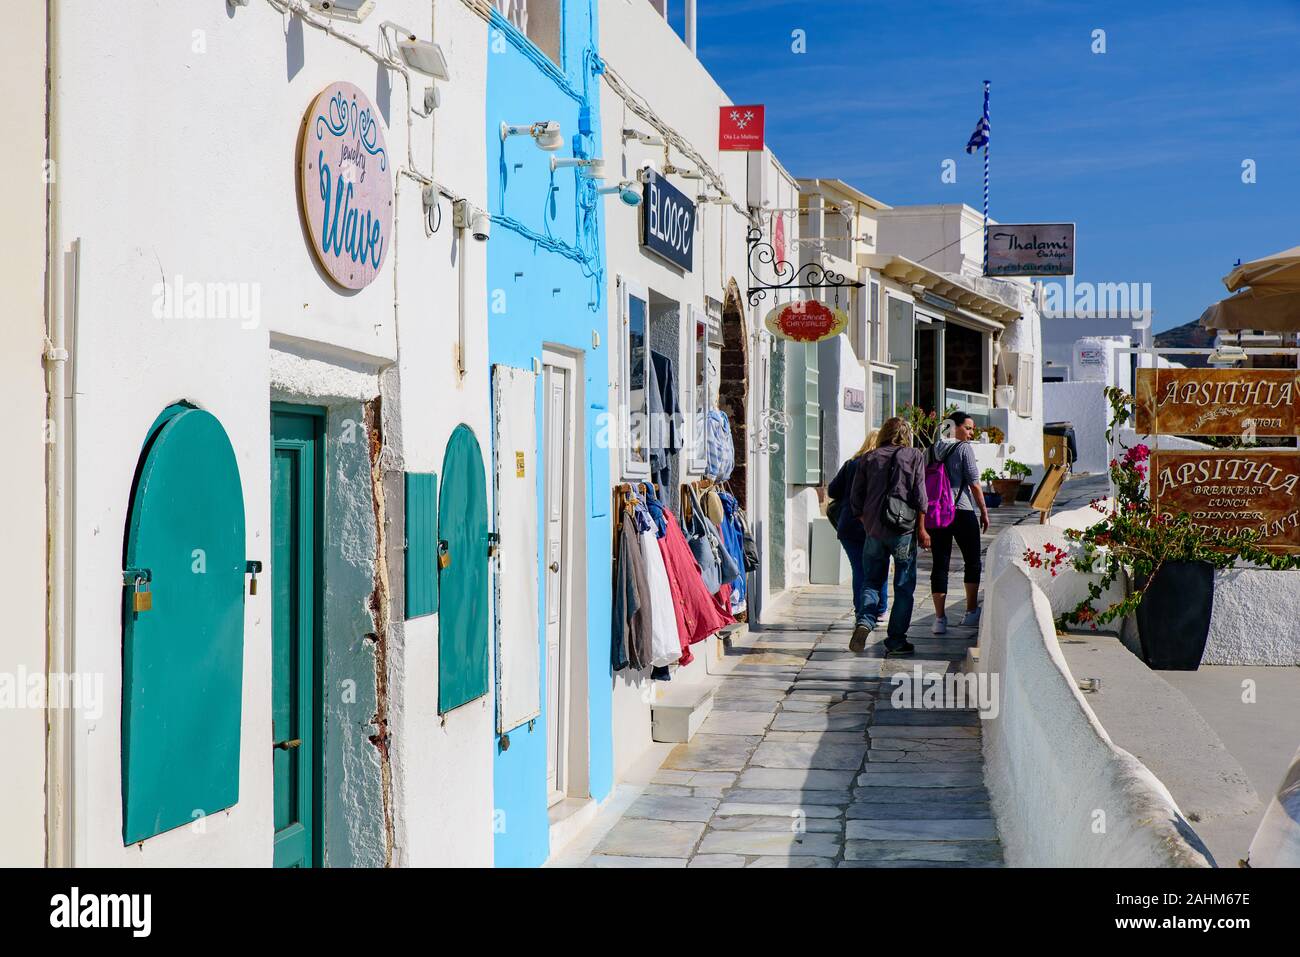 The main street with shops in Oia, Santorini, Greece Stock Photo